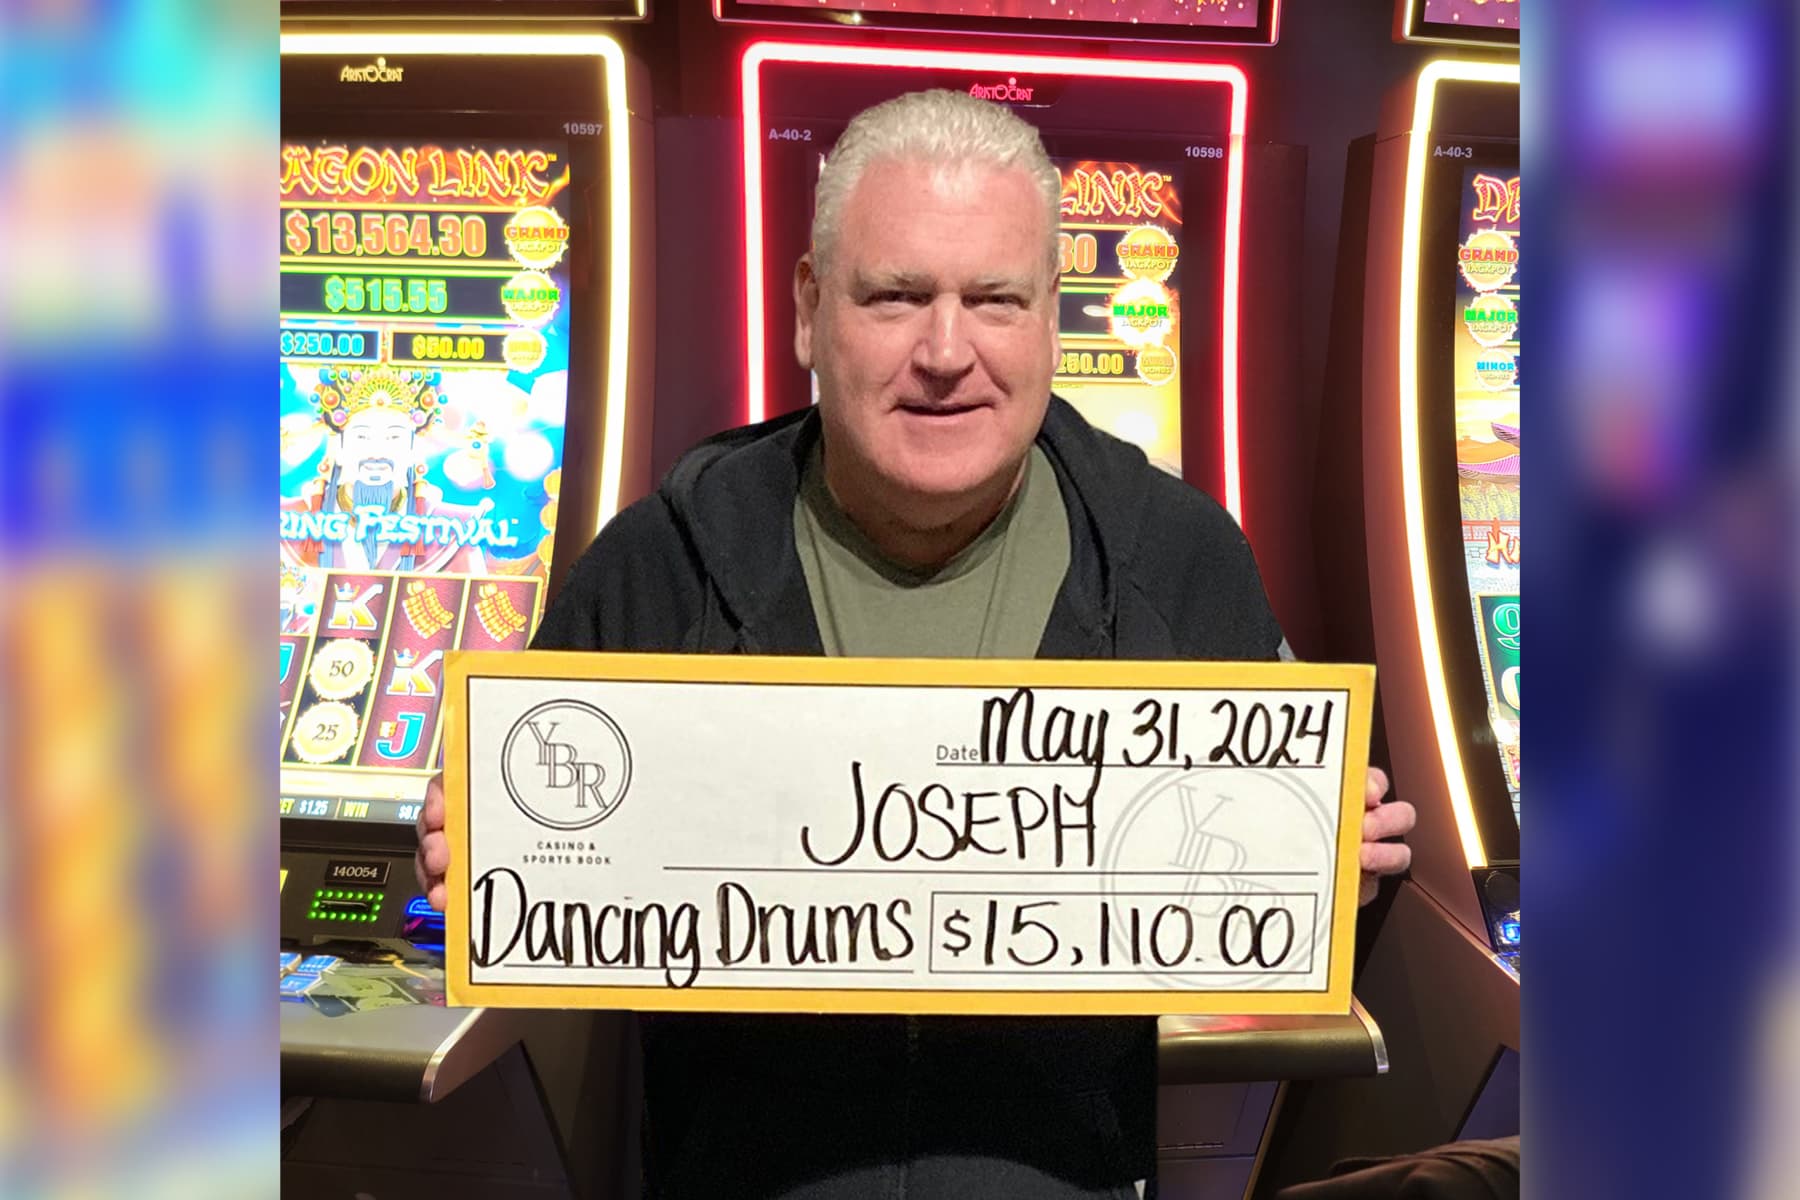 Joseph won $15,110